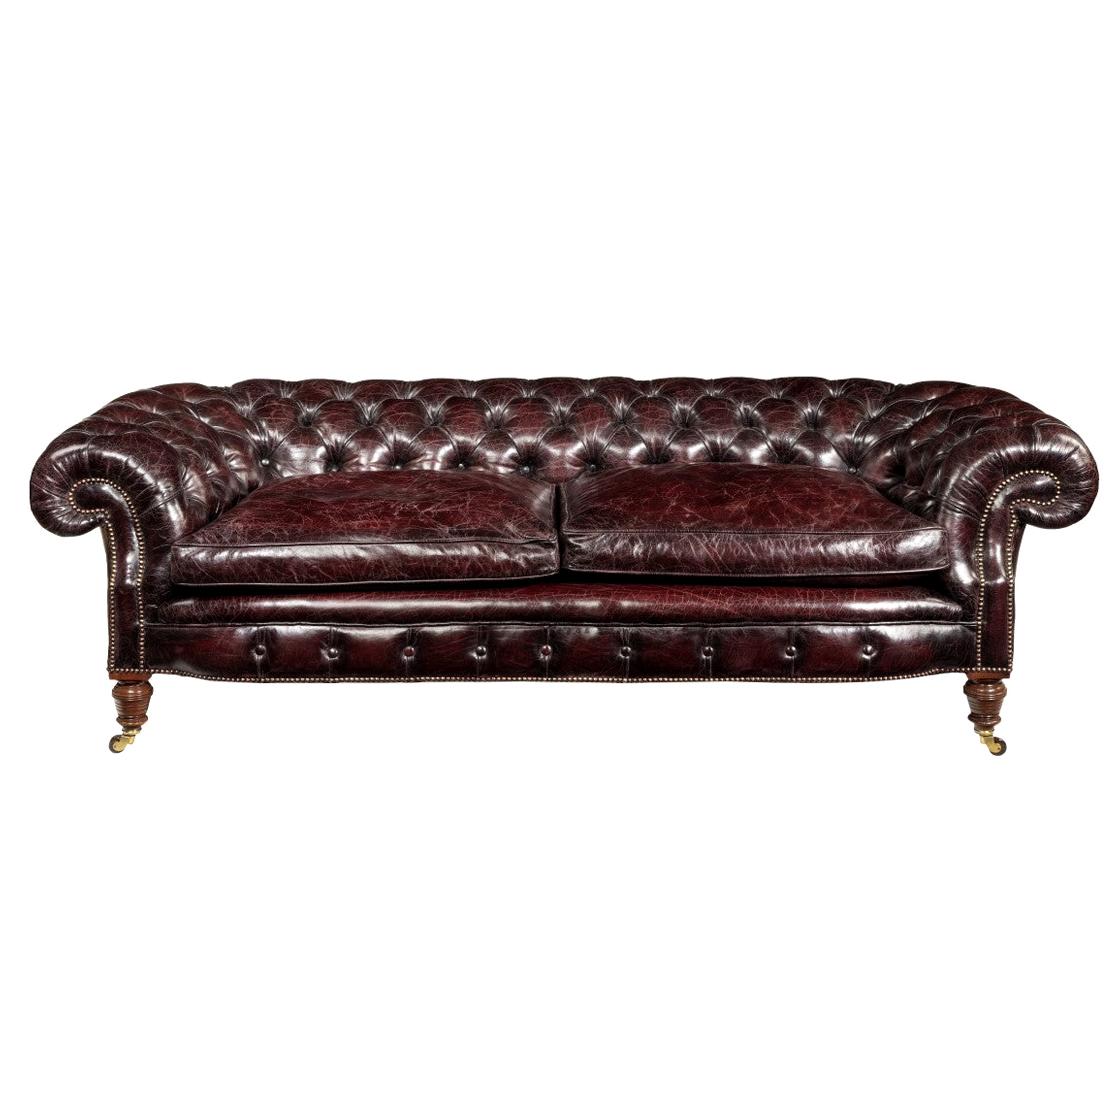 Victorian Walnut Chesterfield Sofa For Sale